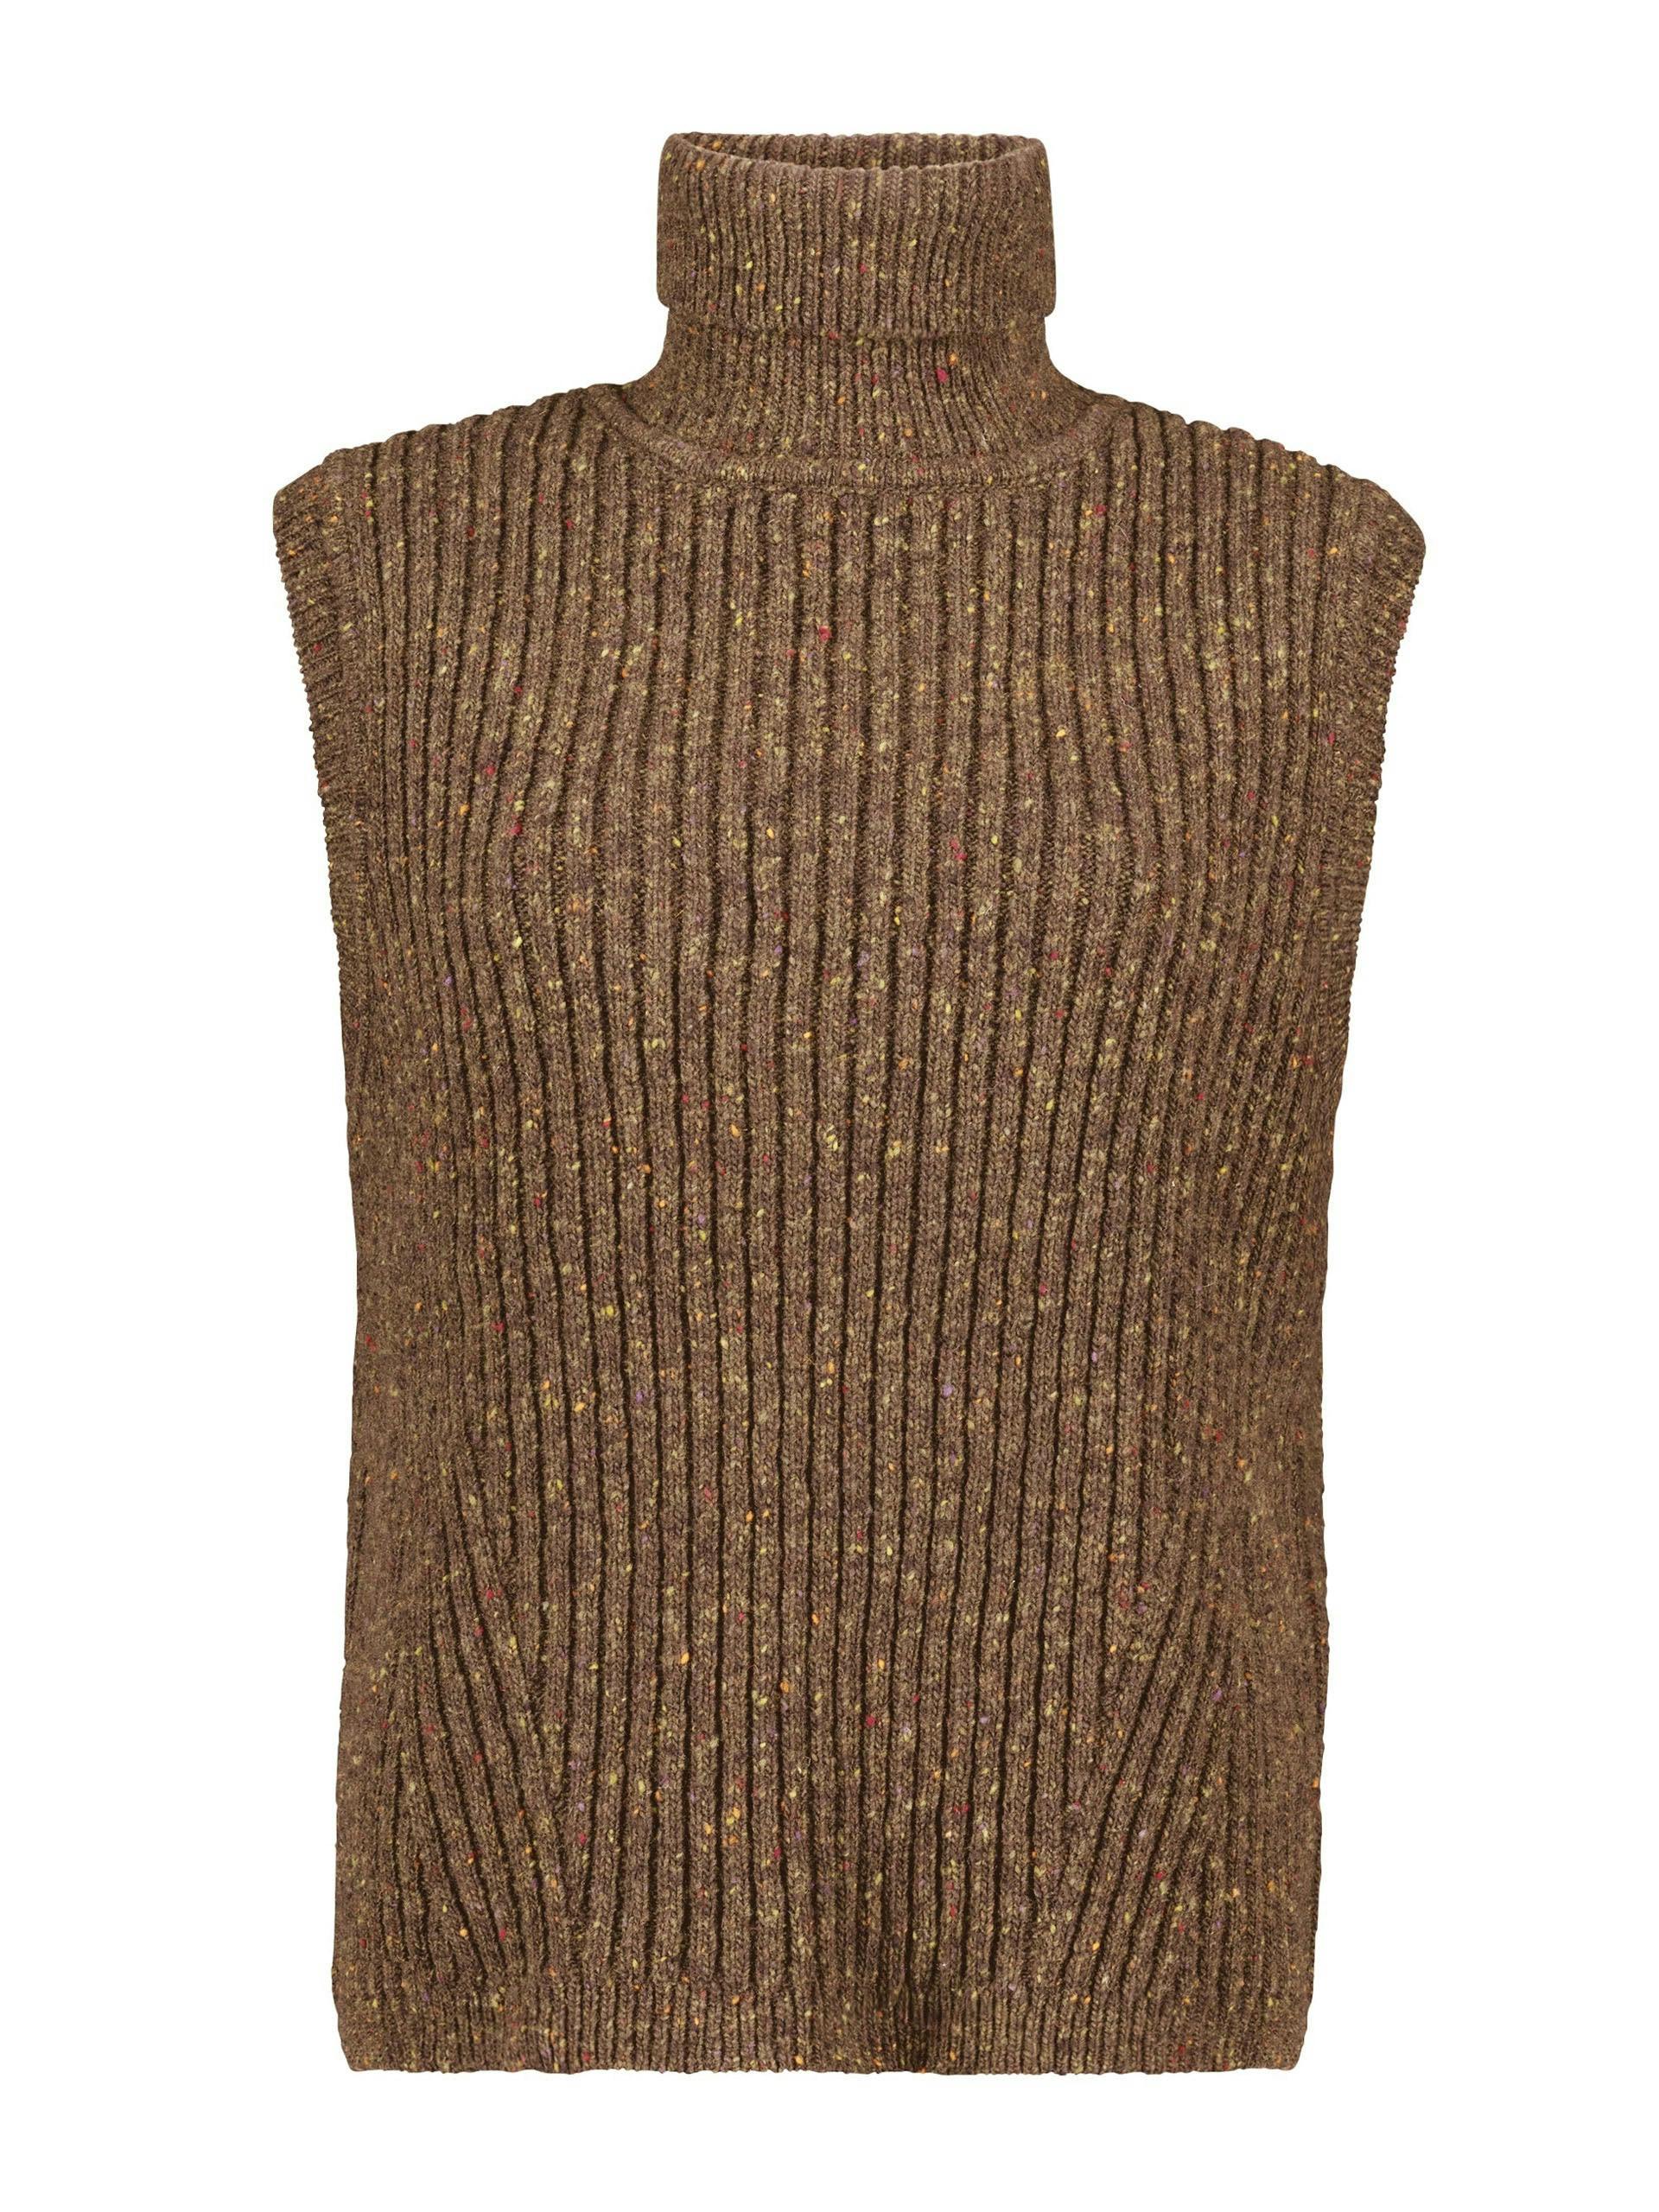 Joline brown merino wool knitted vest